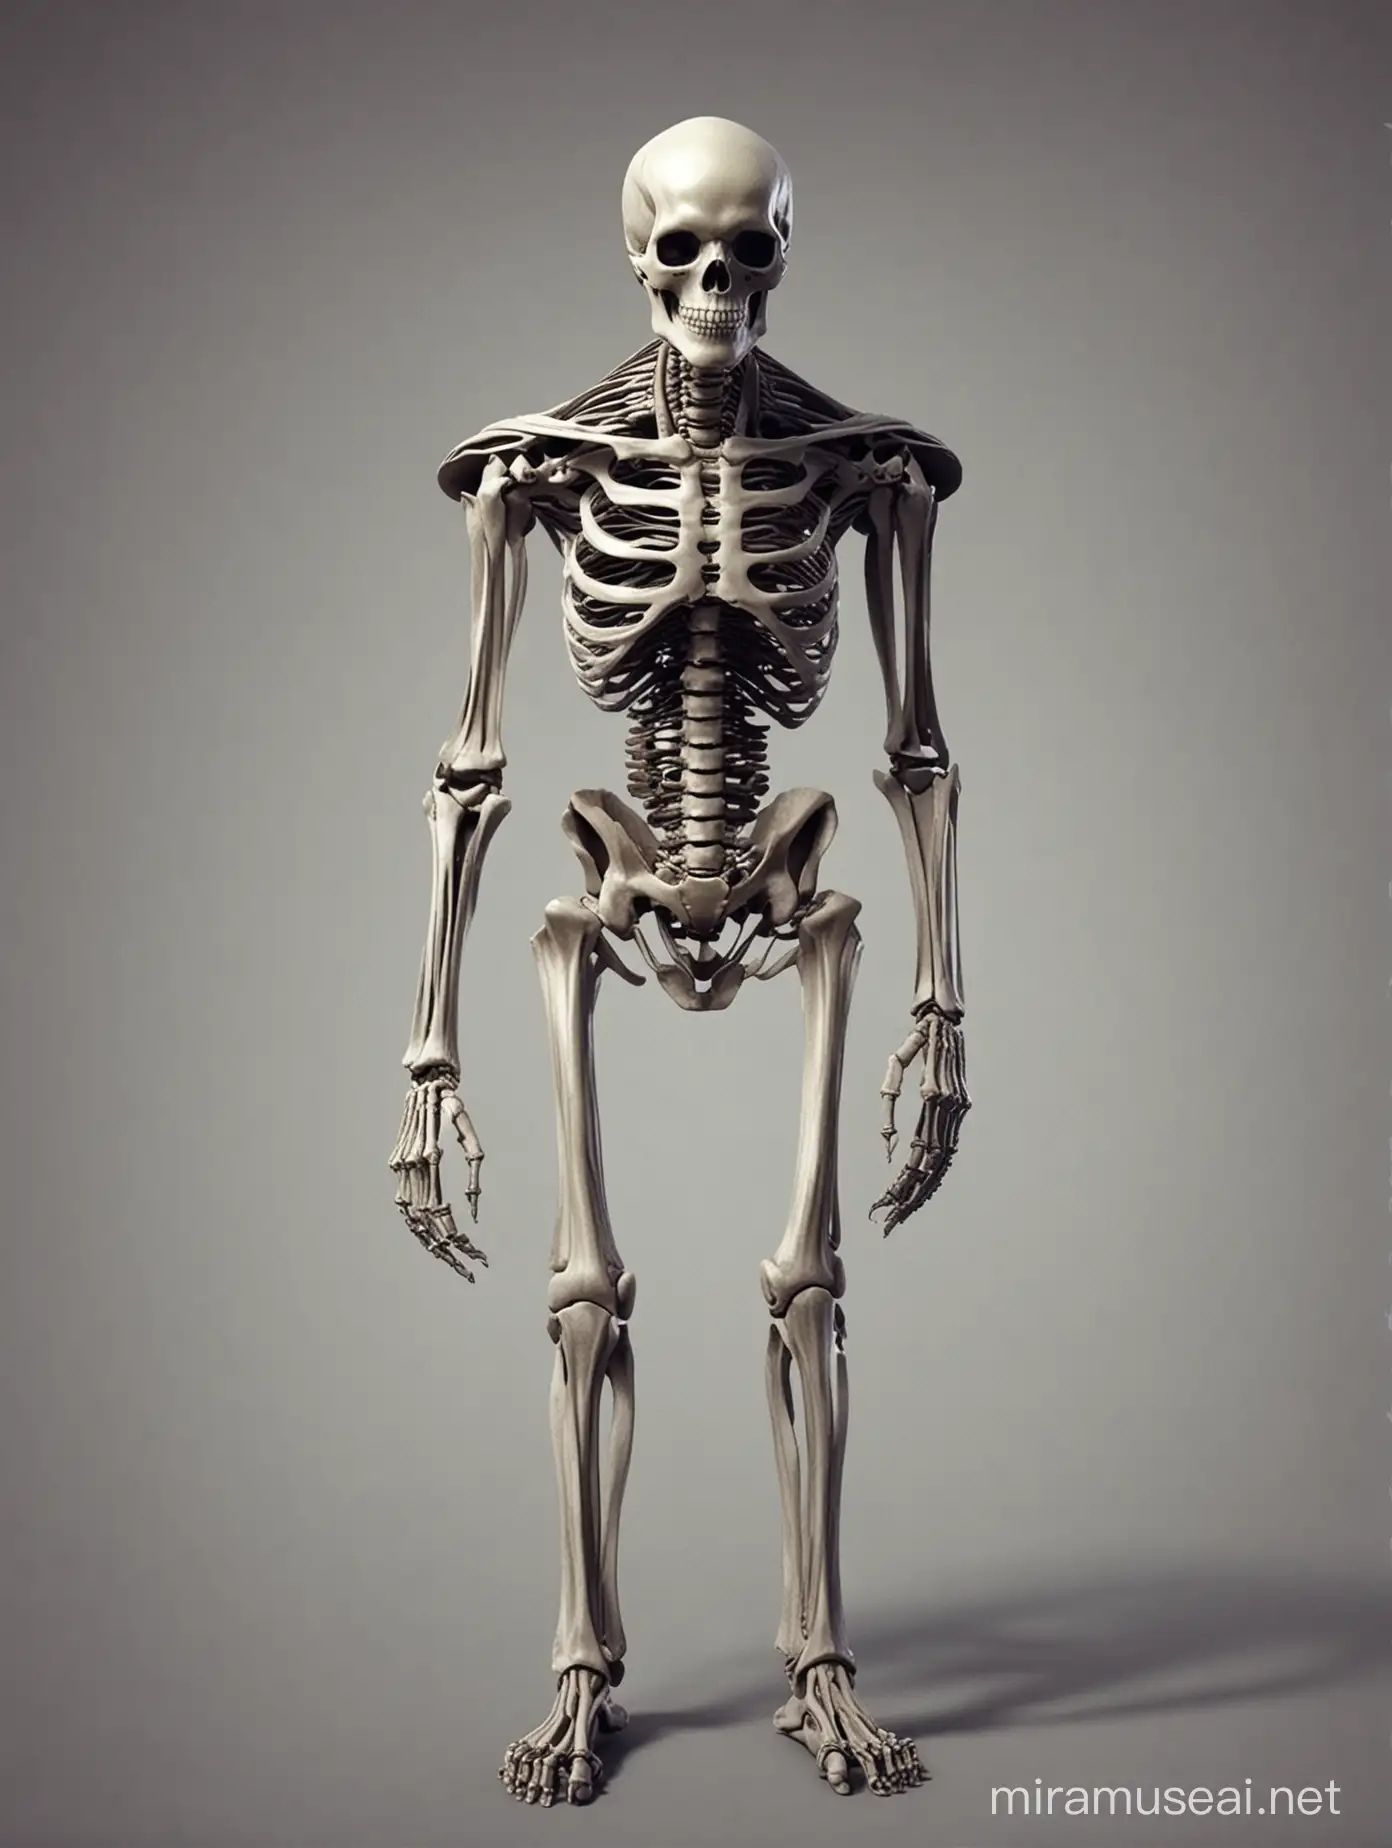 Exo skeleteon for humans